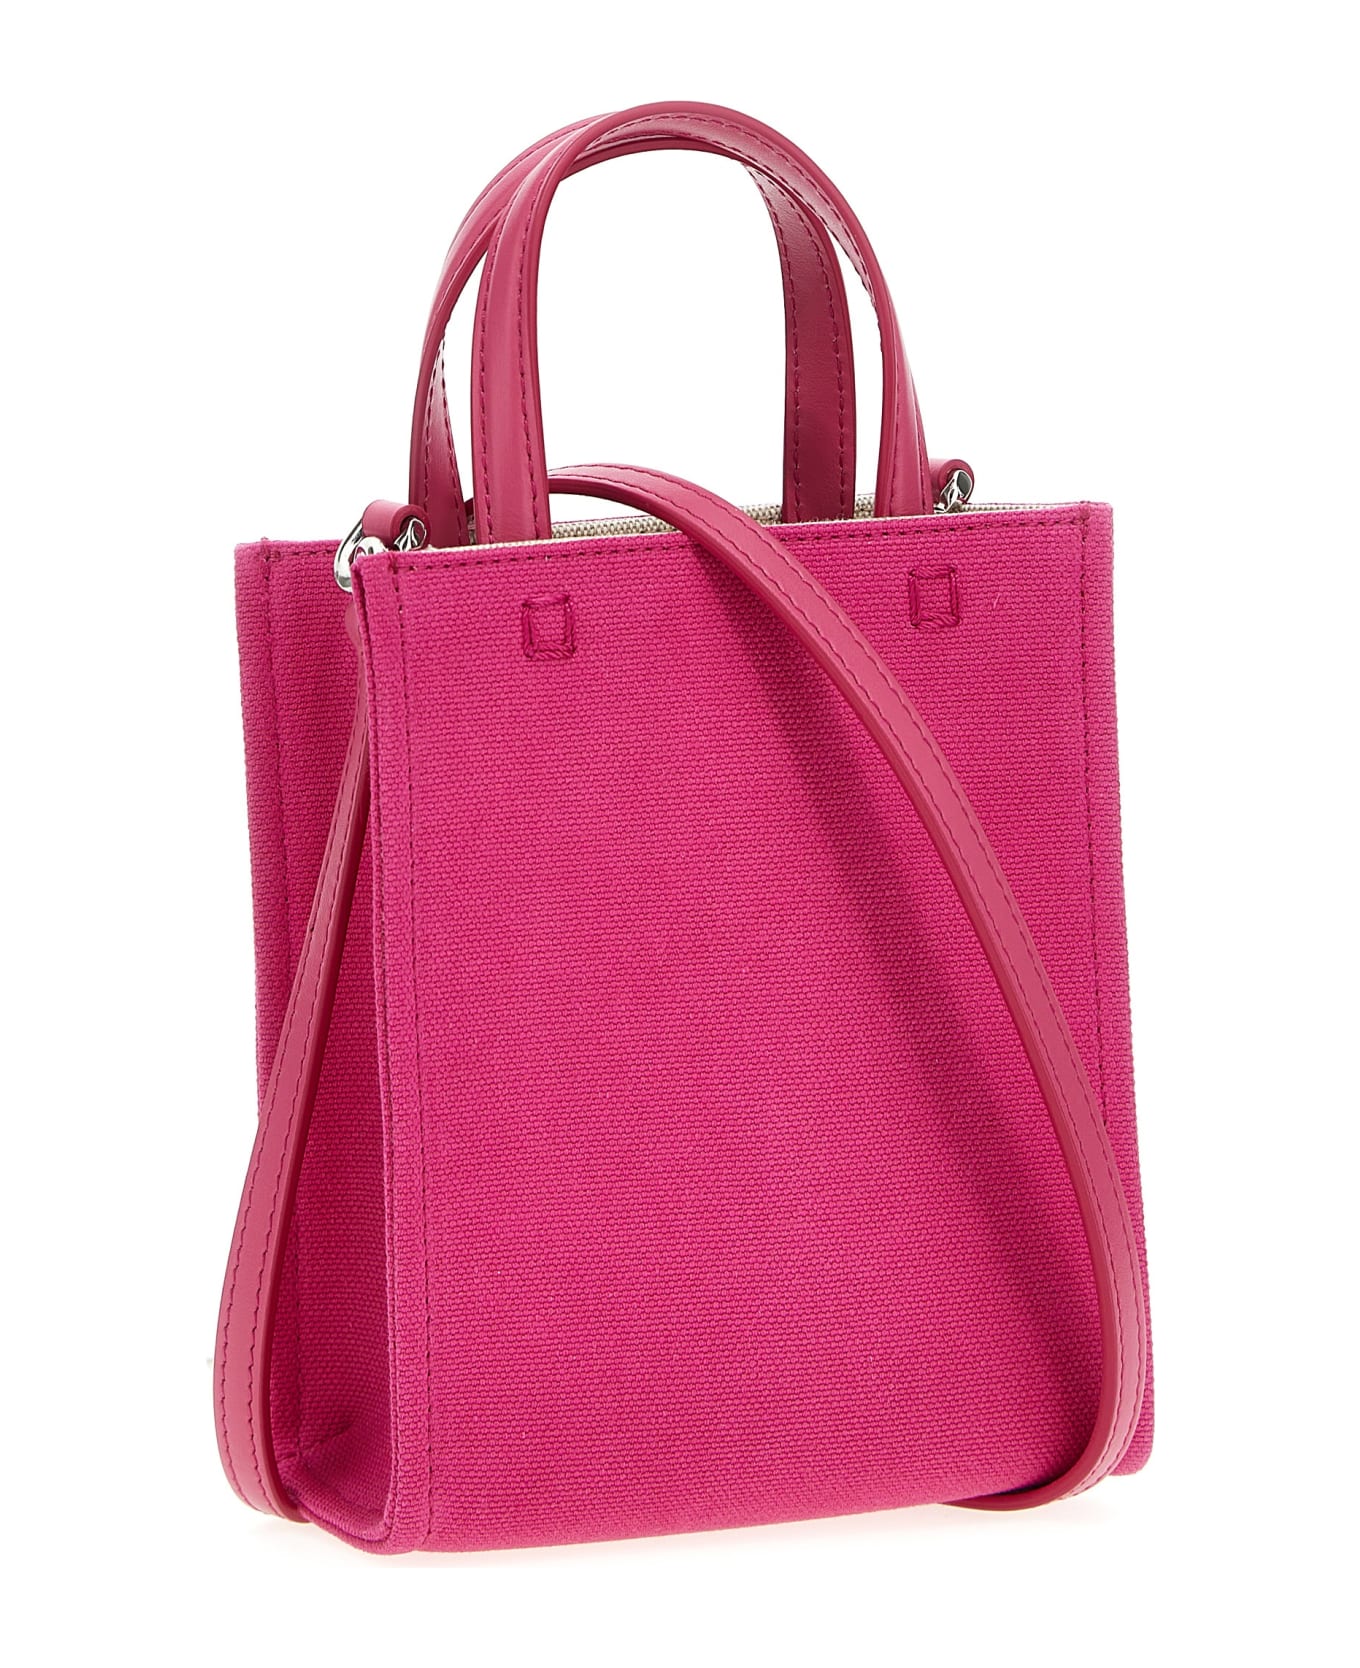 Givenchy G Tote Mini Handbag - Fuchsia